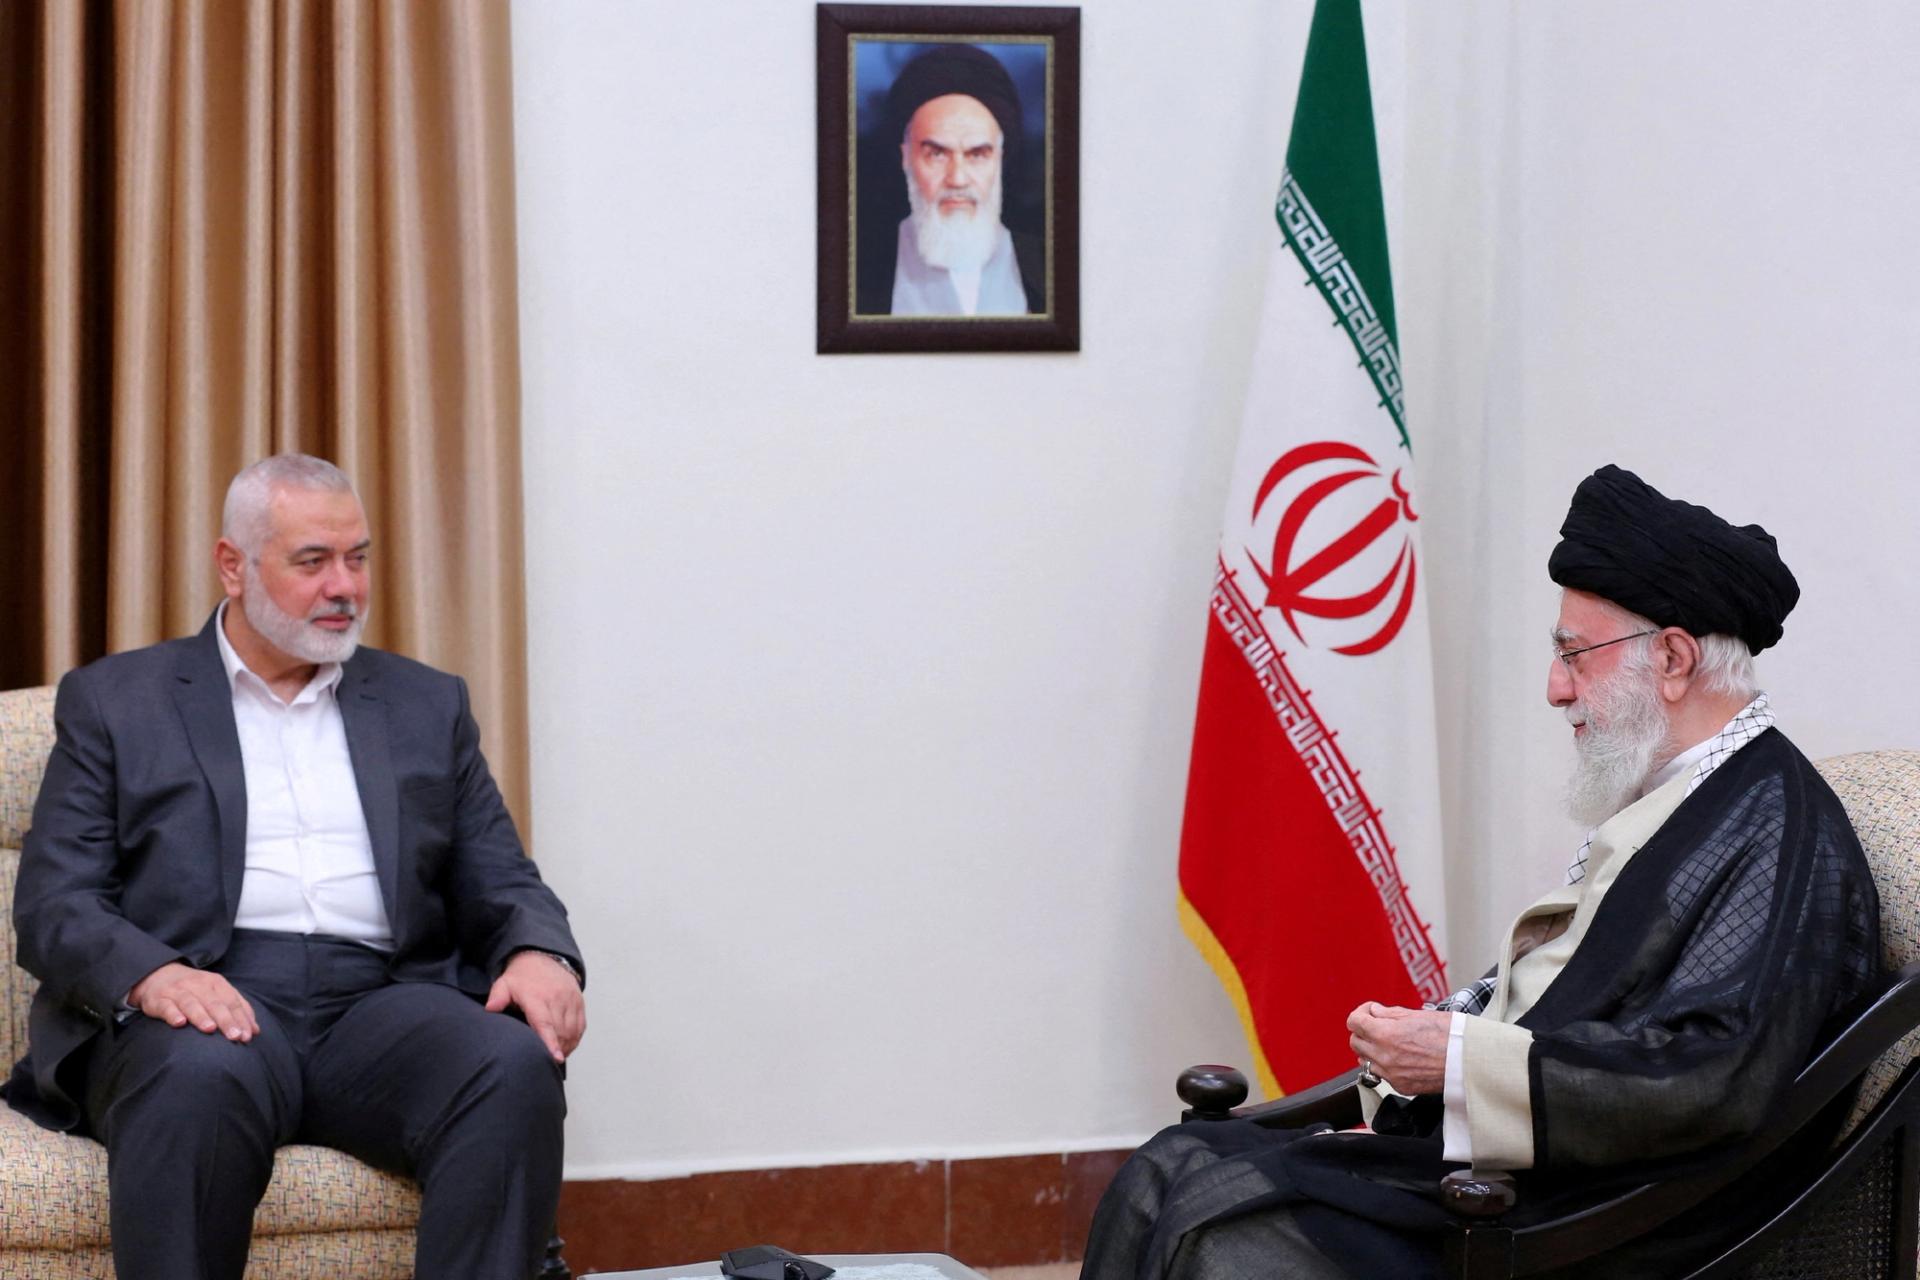 Iran's Supreme Leader Ayatollah Ali Khamenei and Hamas's political leader Ismail Haniyeh